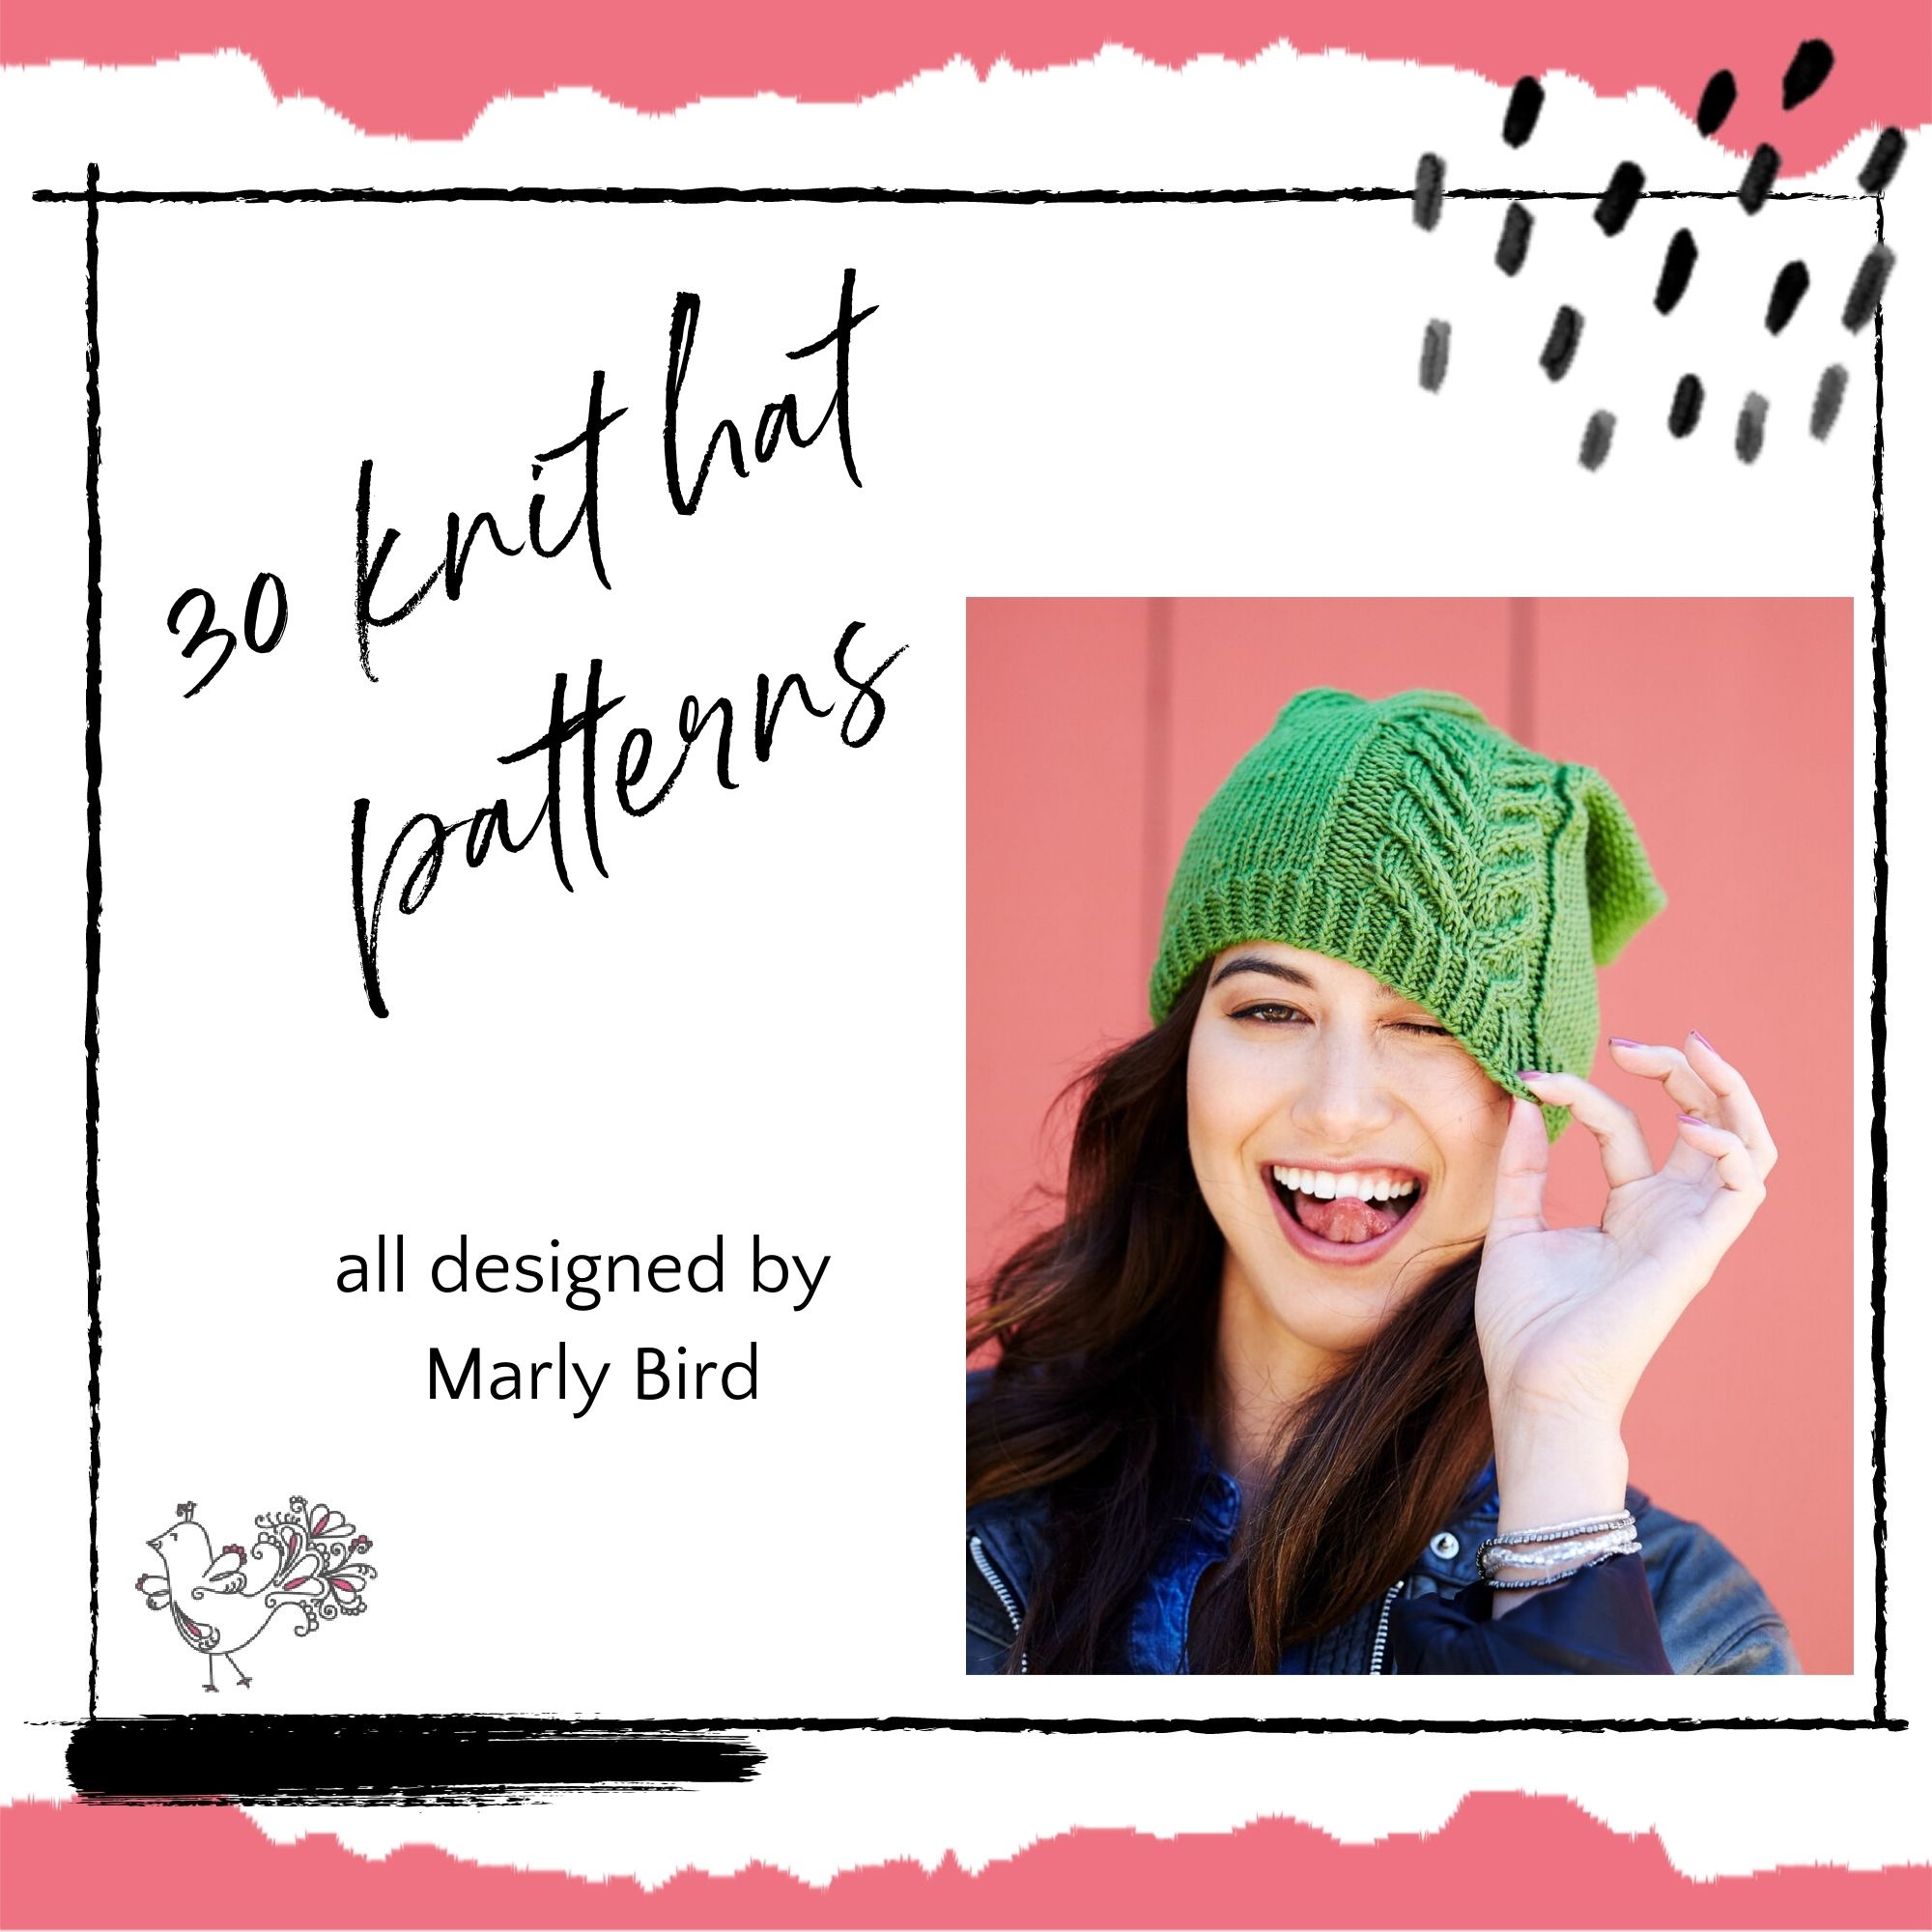 Marly Bird knit hat patterns